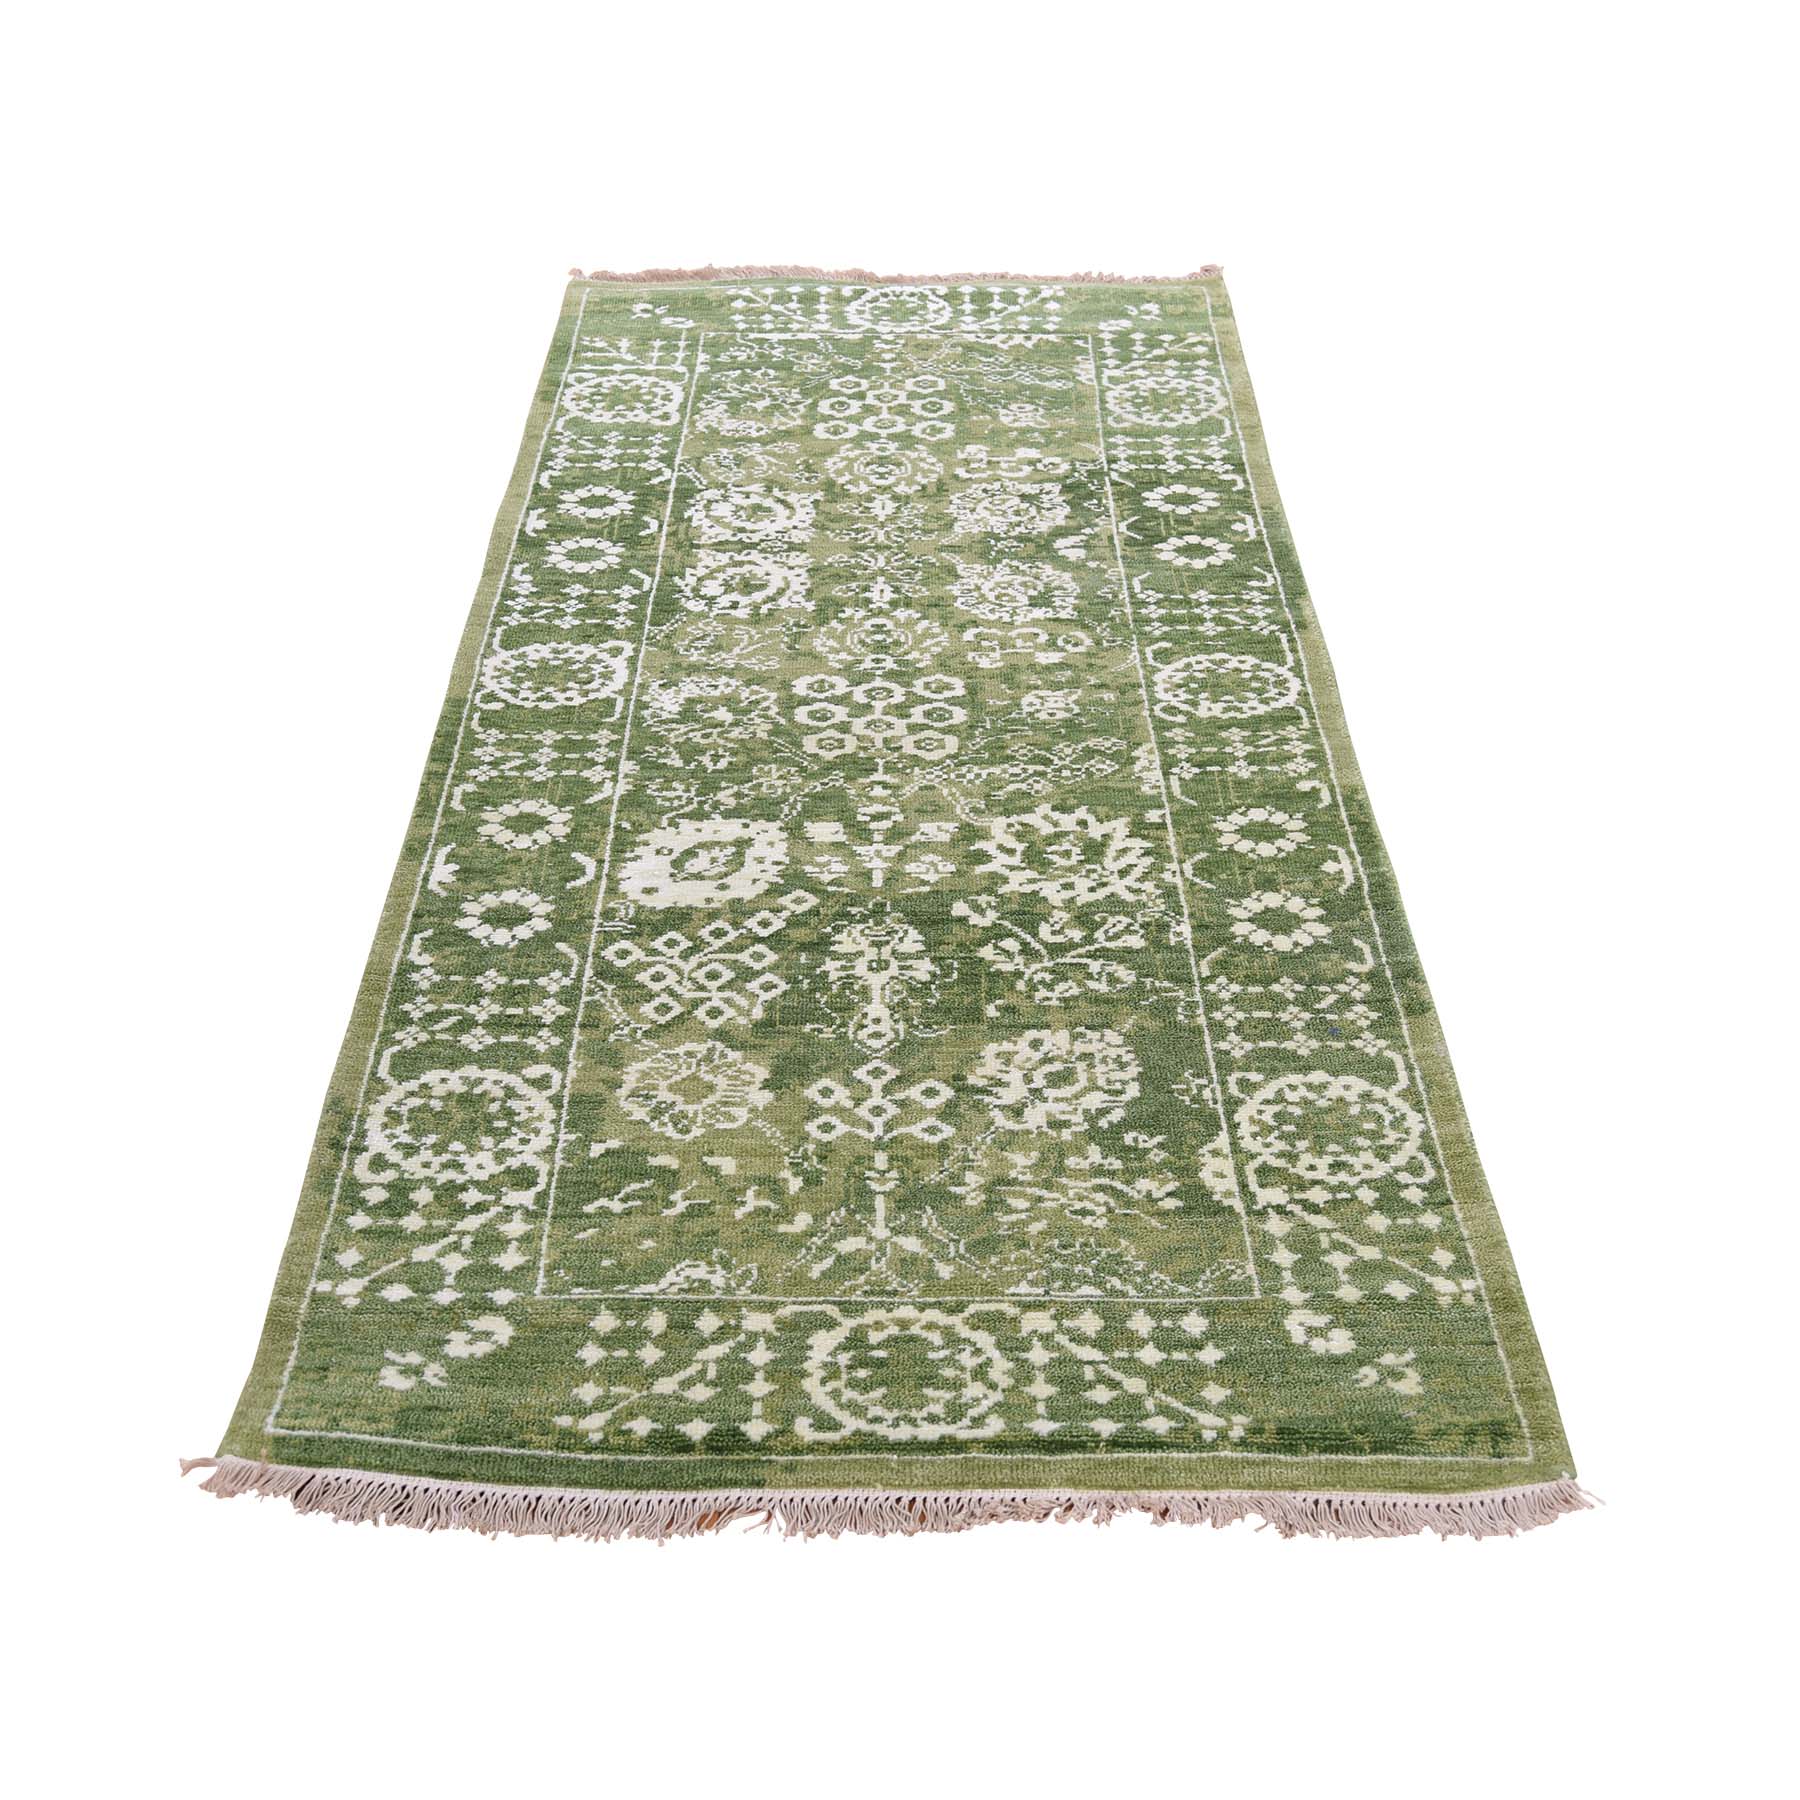 2'6"x6' Tabriz Tone on Tone Wool and Silk Hand Woven Runner Oriental Rug 